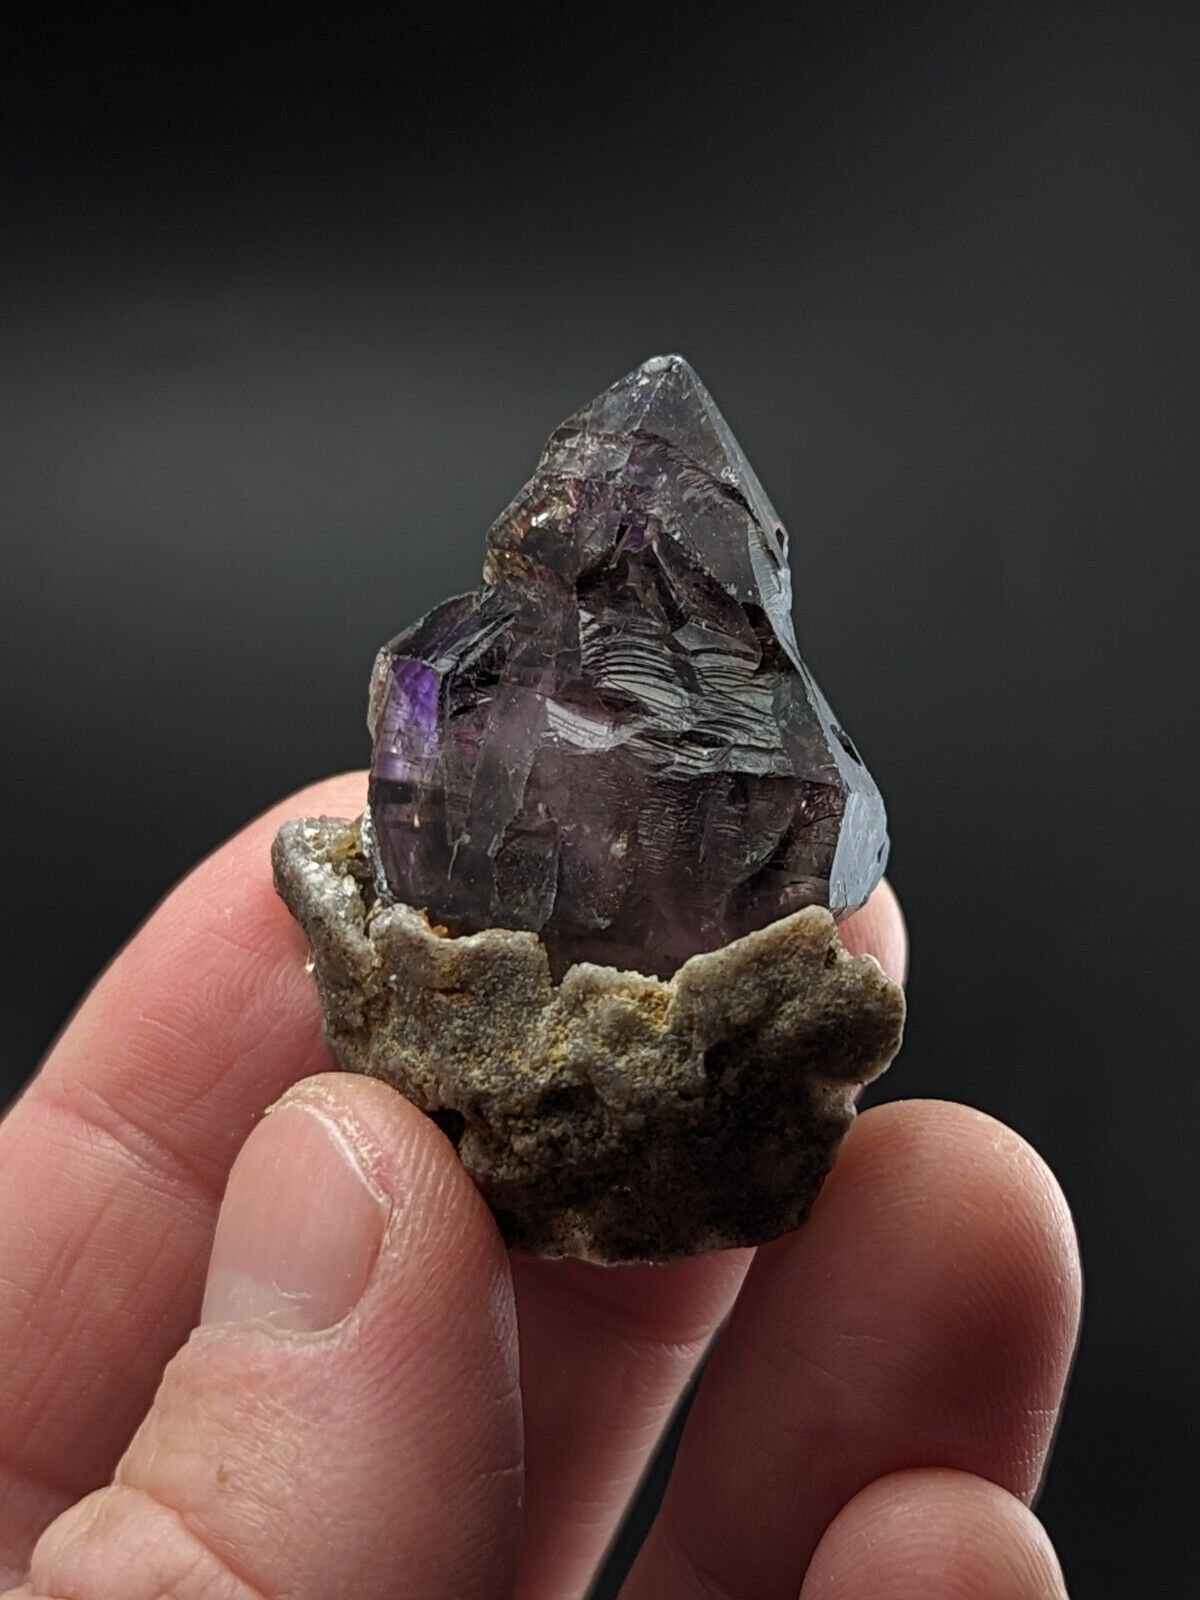 Shangaan Amethyst Scepter Crystal from Chibuku Zimbabwe, "Hatched Egg"